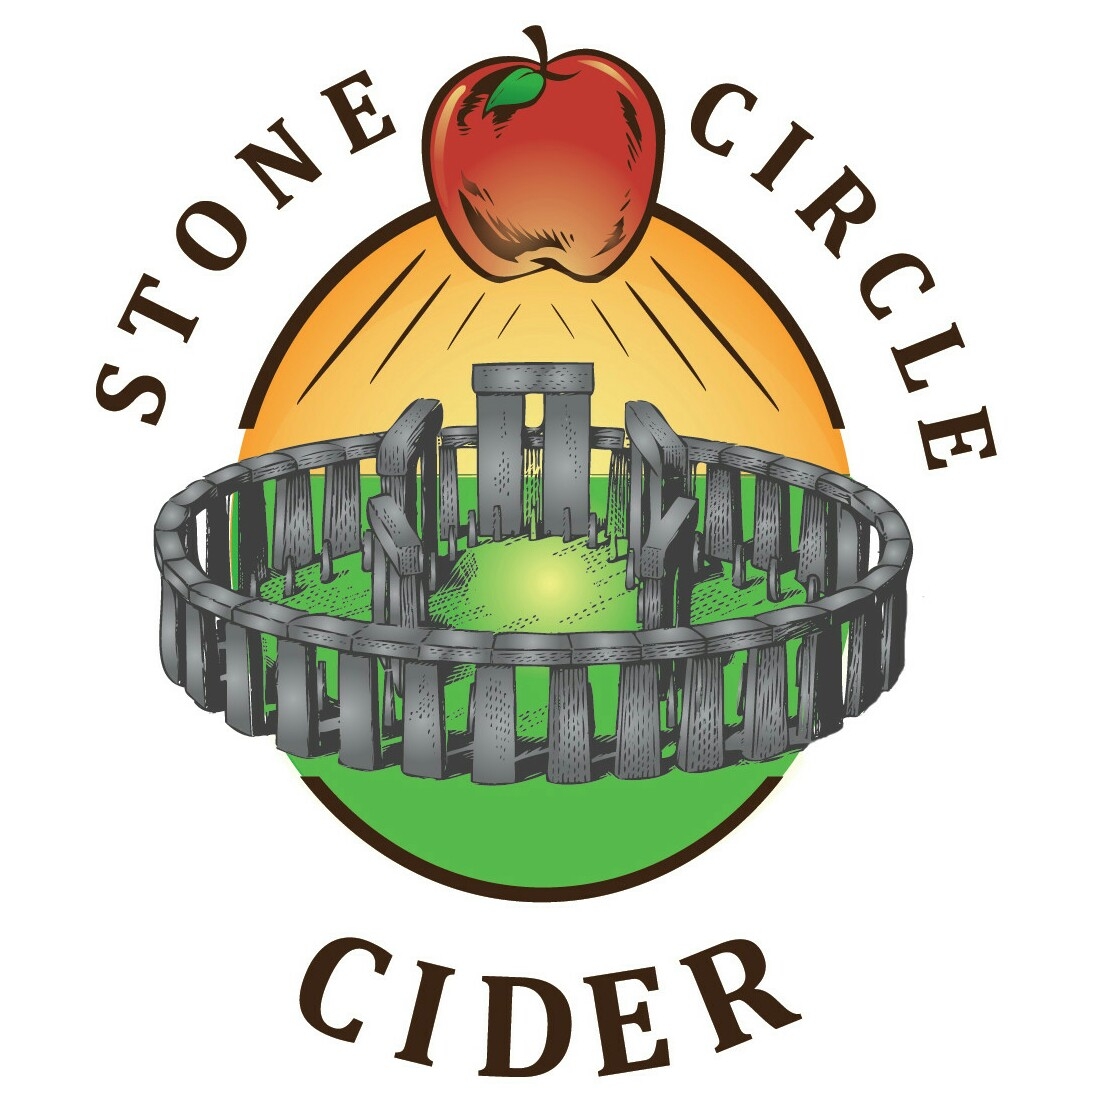 Stone Circle Cider